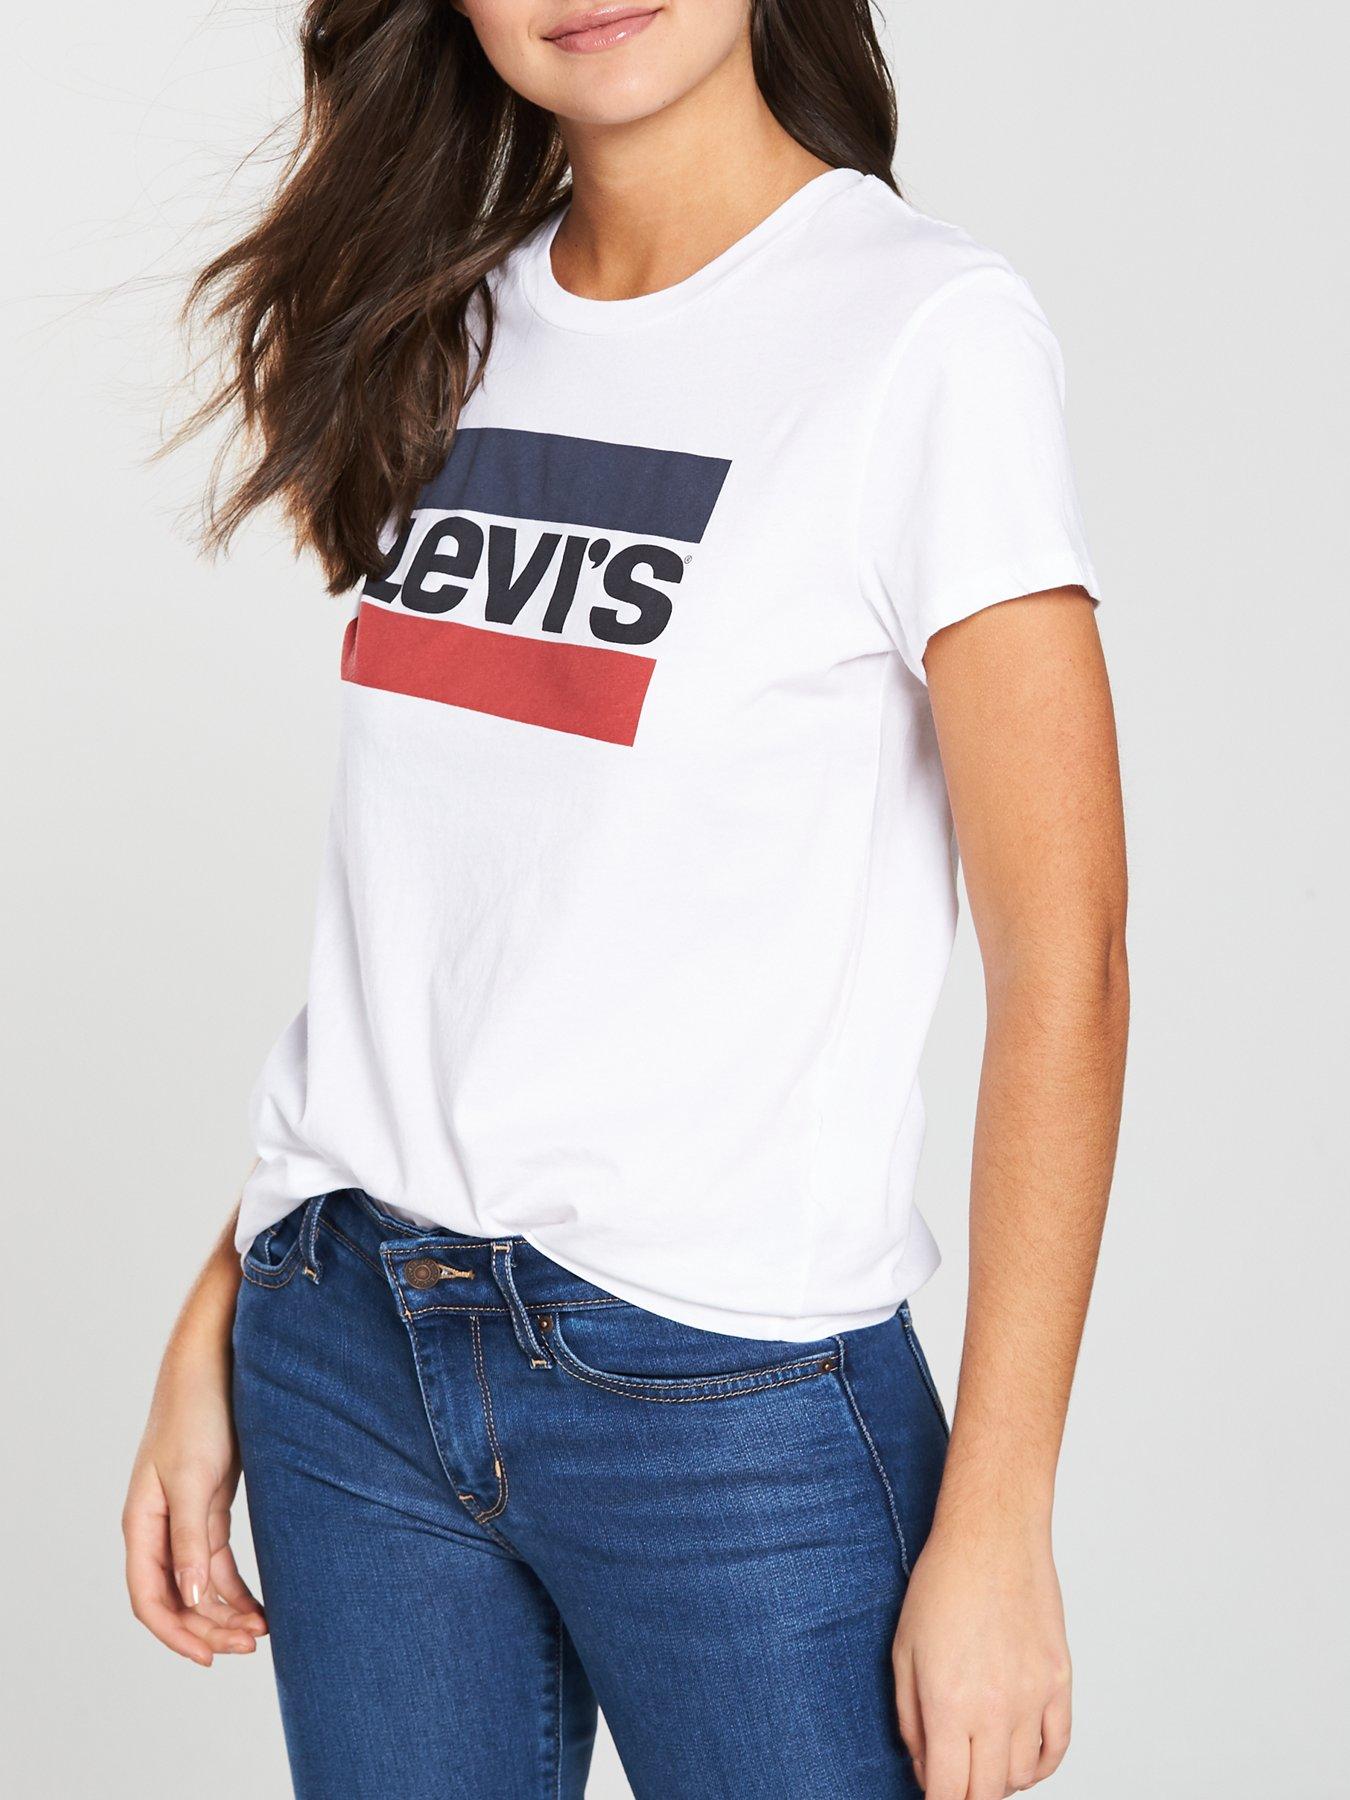 Levi's T-Shirts | Levi's Tops 